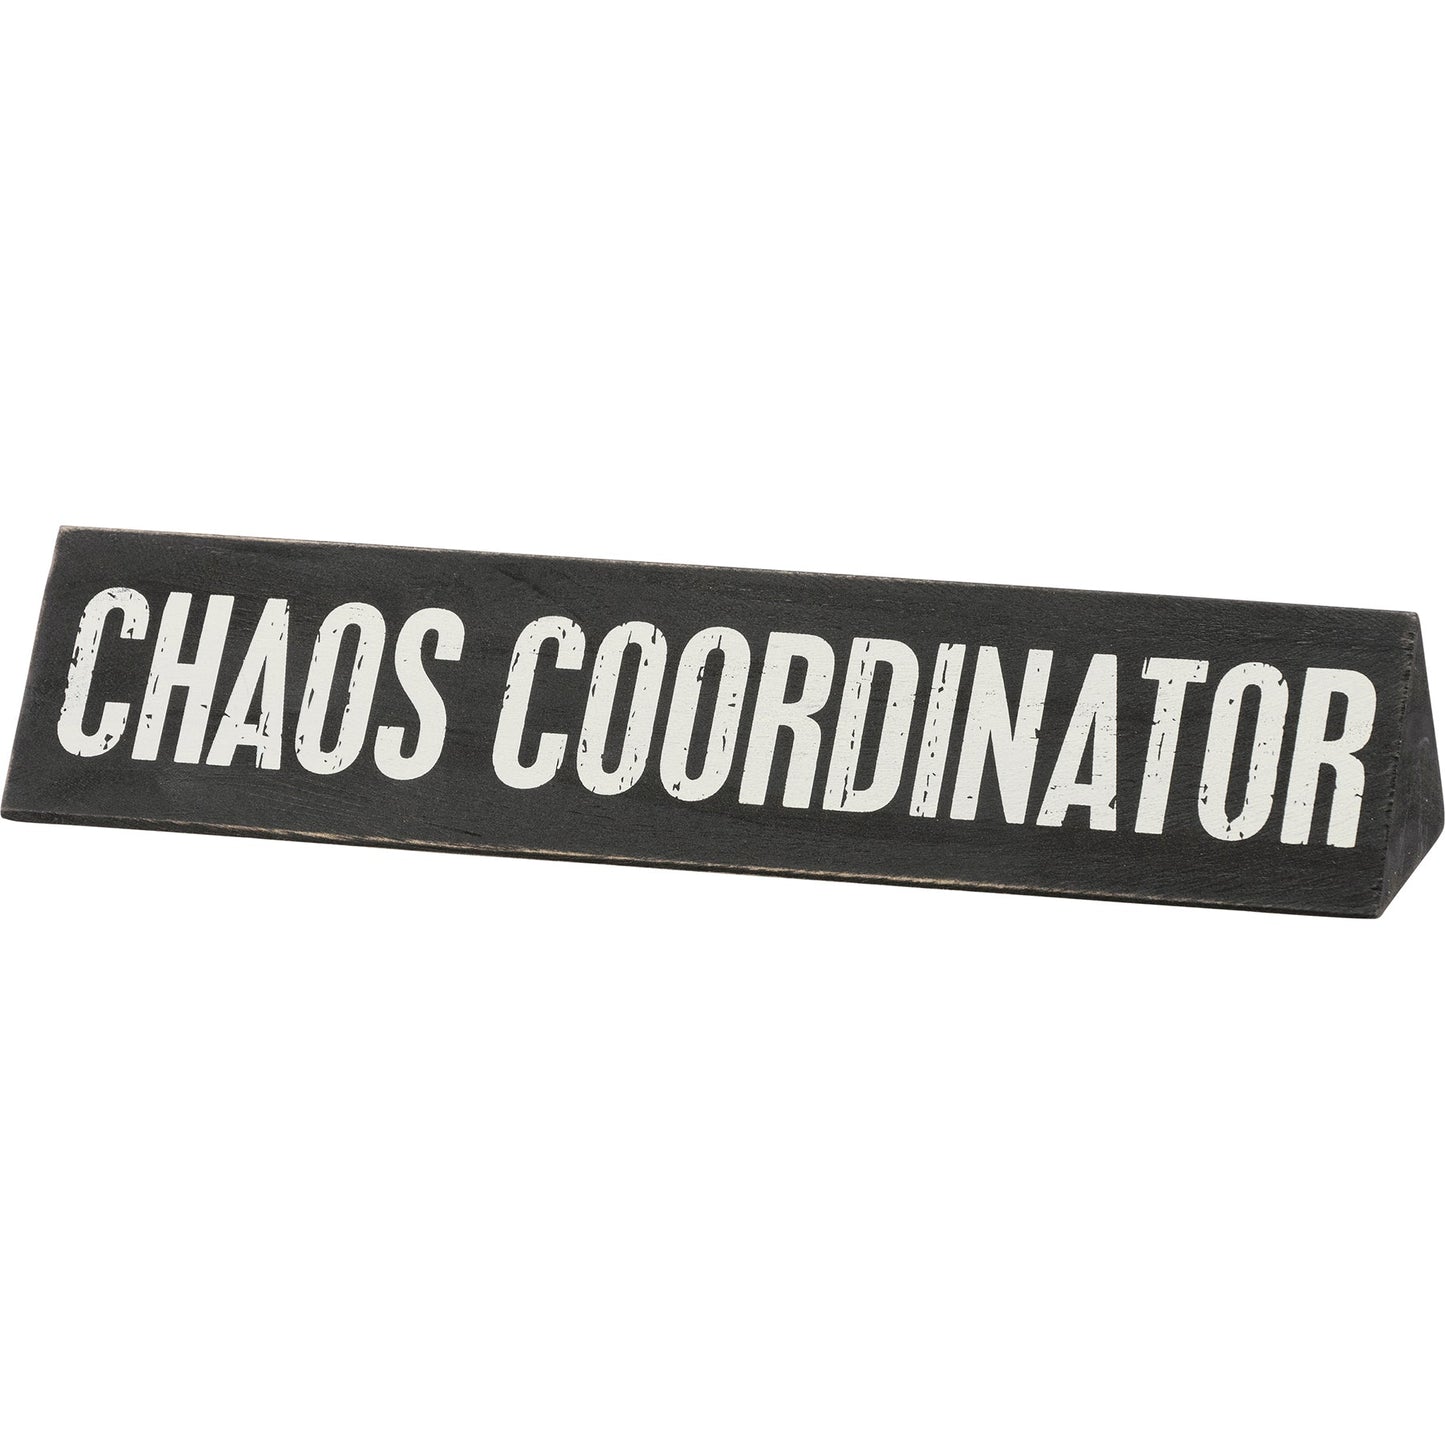 Chaos Coordinator / Director Of Sarcasm Reversible Wooden Desk Plate